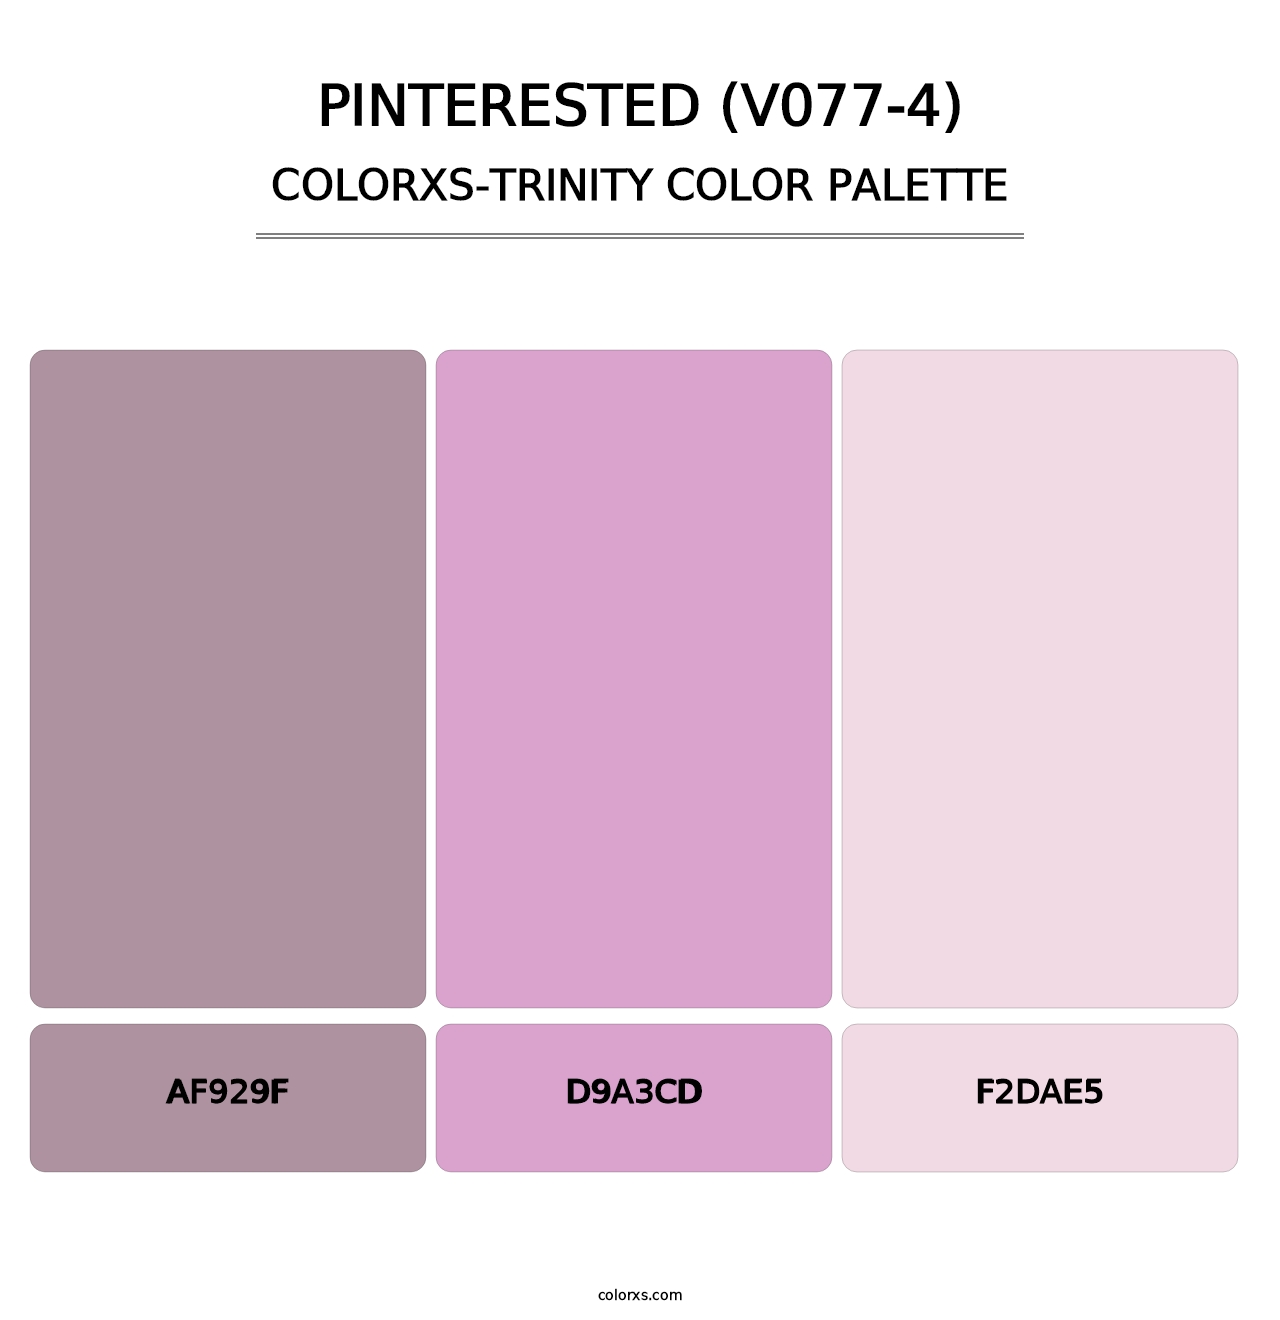 Pinterested (V077-4) - Colorxs Trinity Palette